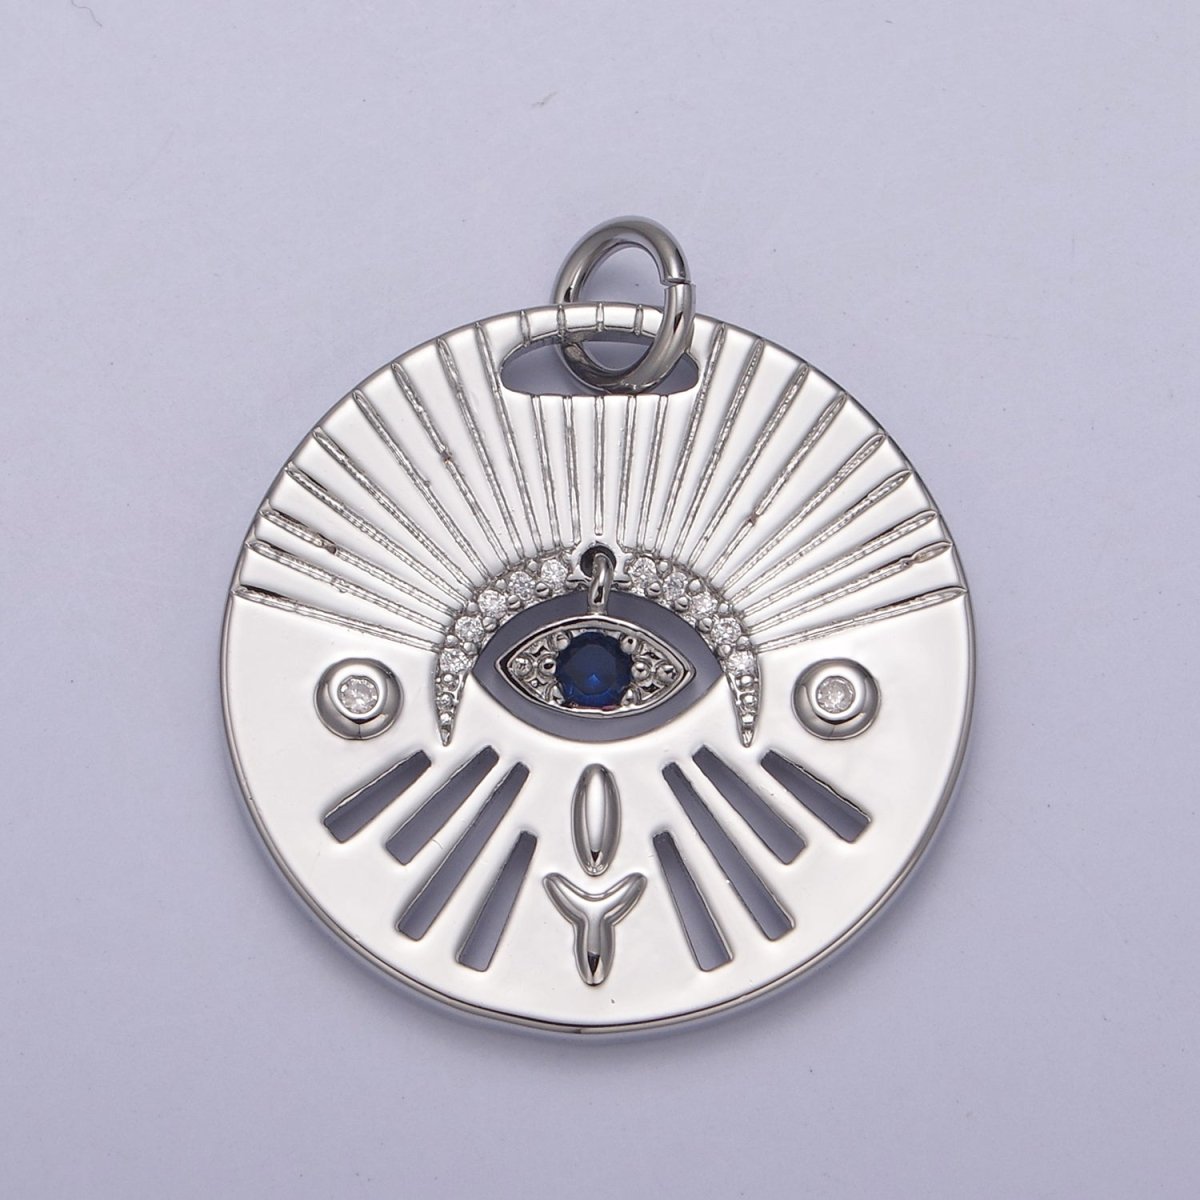 14K Gold Filled Evil Eye Charm, Gold Disc Evil Eye Pendant, Cubic Medallion Coin Charm, Amulet Talisman Pendant N-763 N-764 - DLUXCA